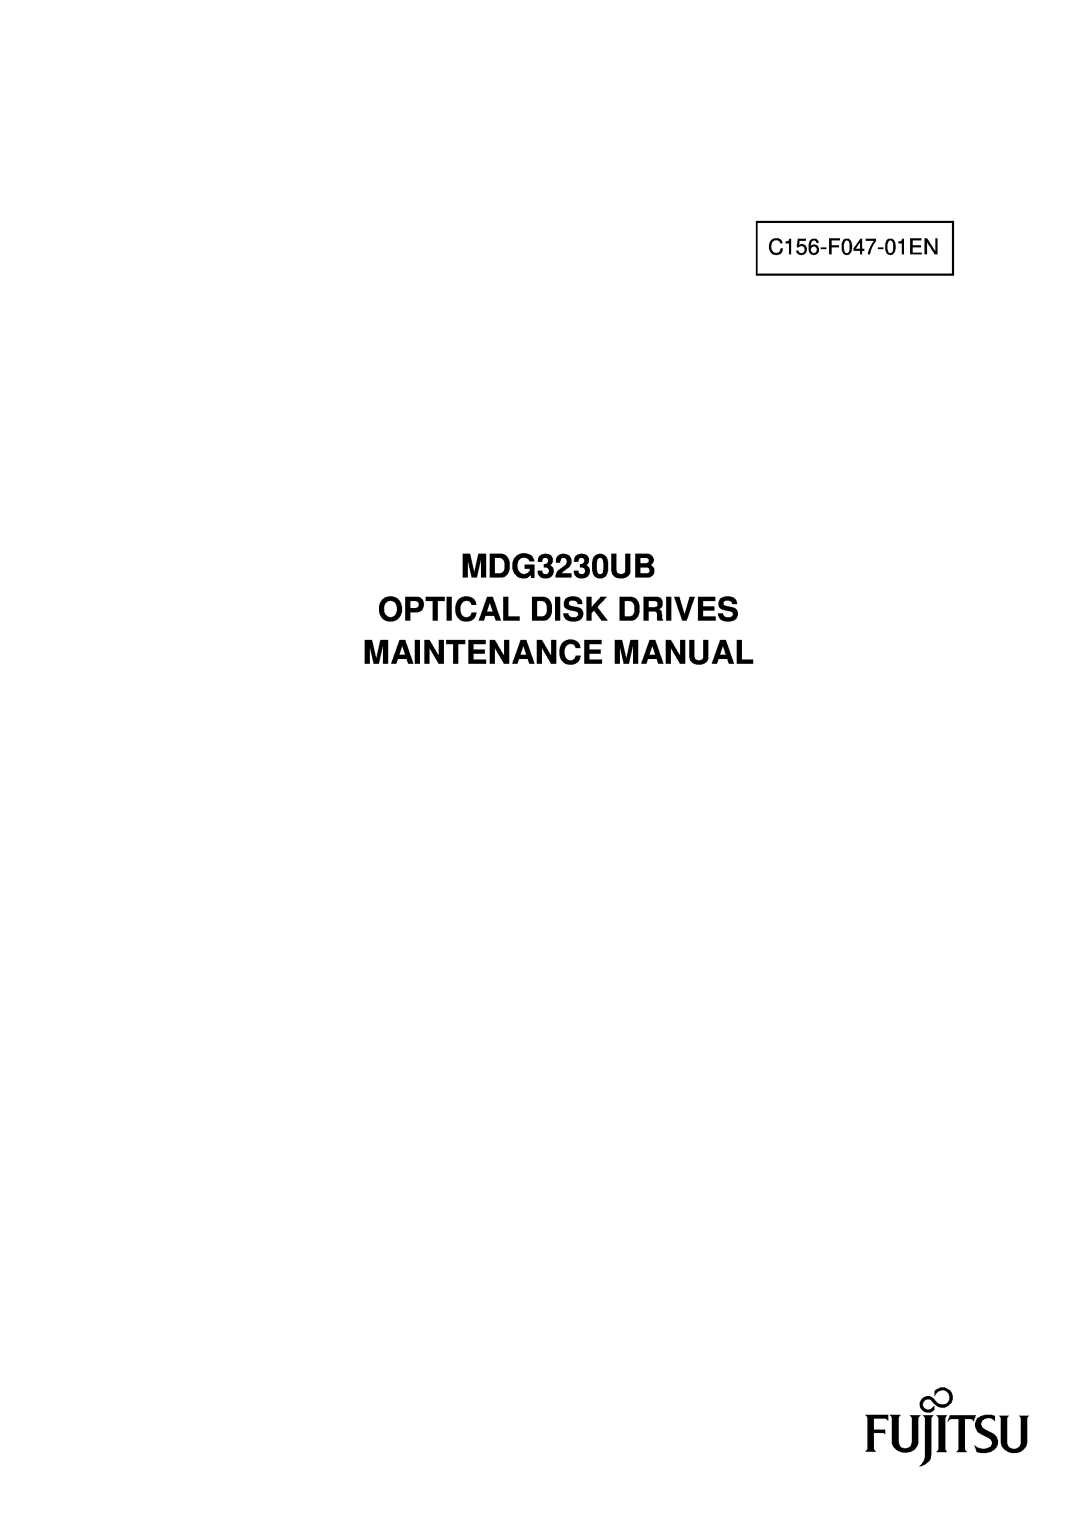 Fujitsu manual MDG3230UB OPTICAL DISK DRIVES MAINTENANCE MANUAL, C156-F047-01EN 